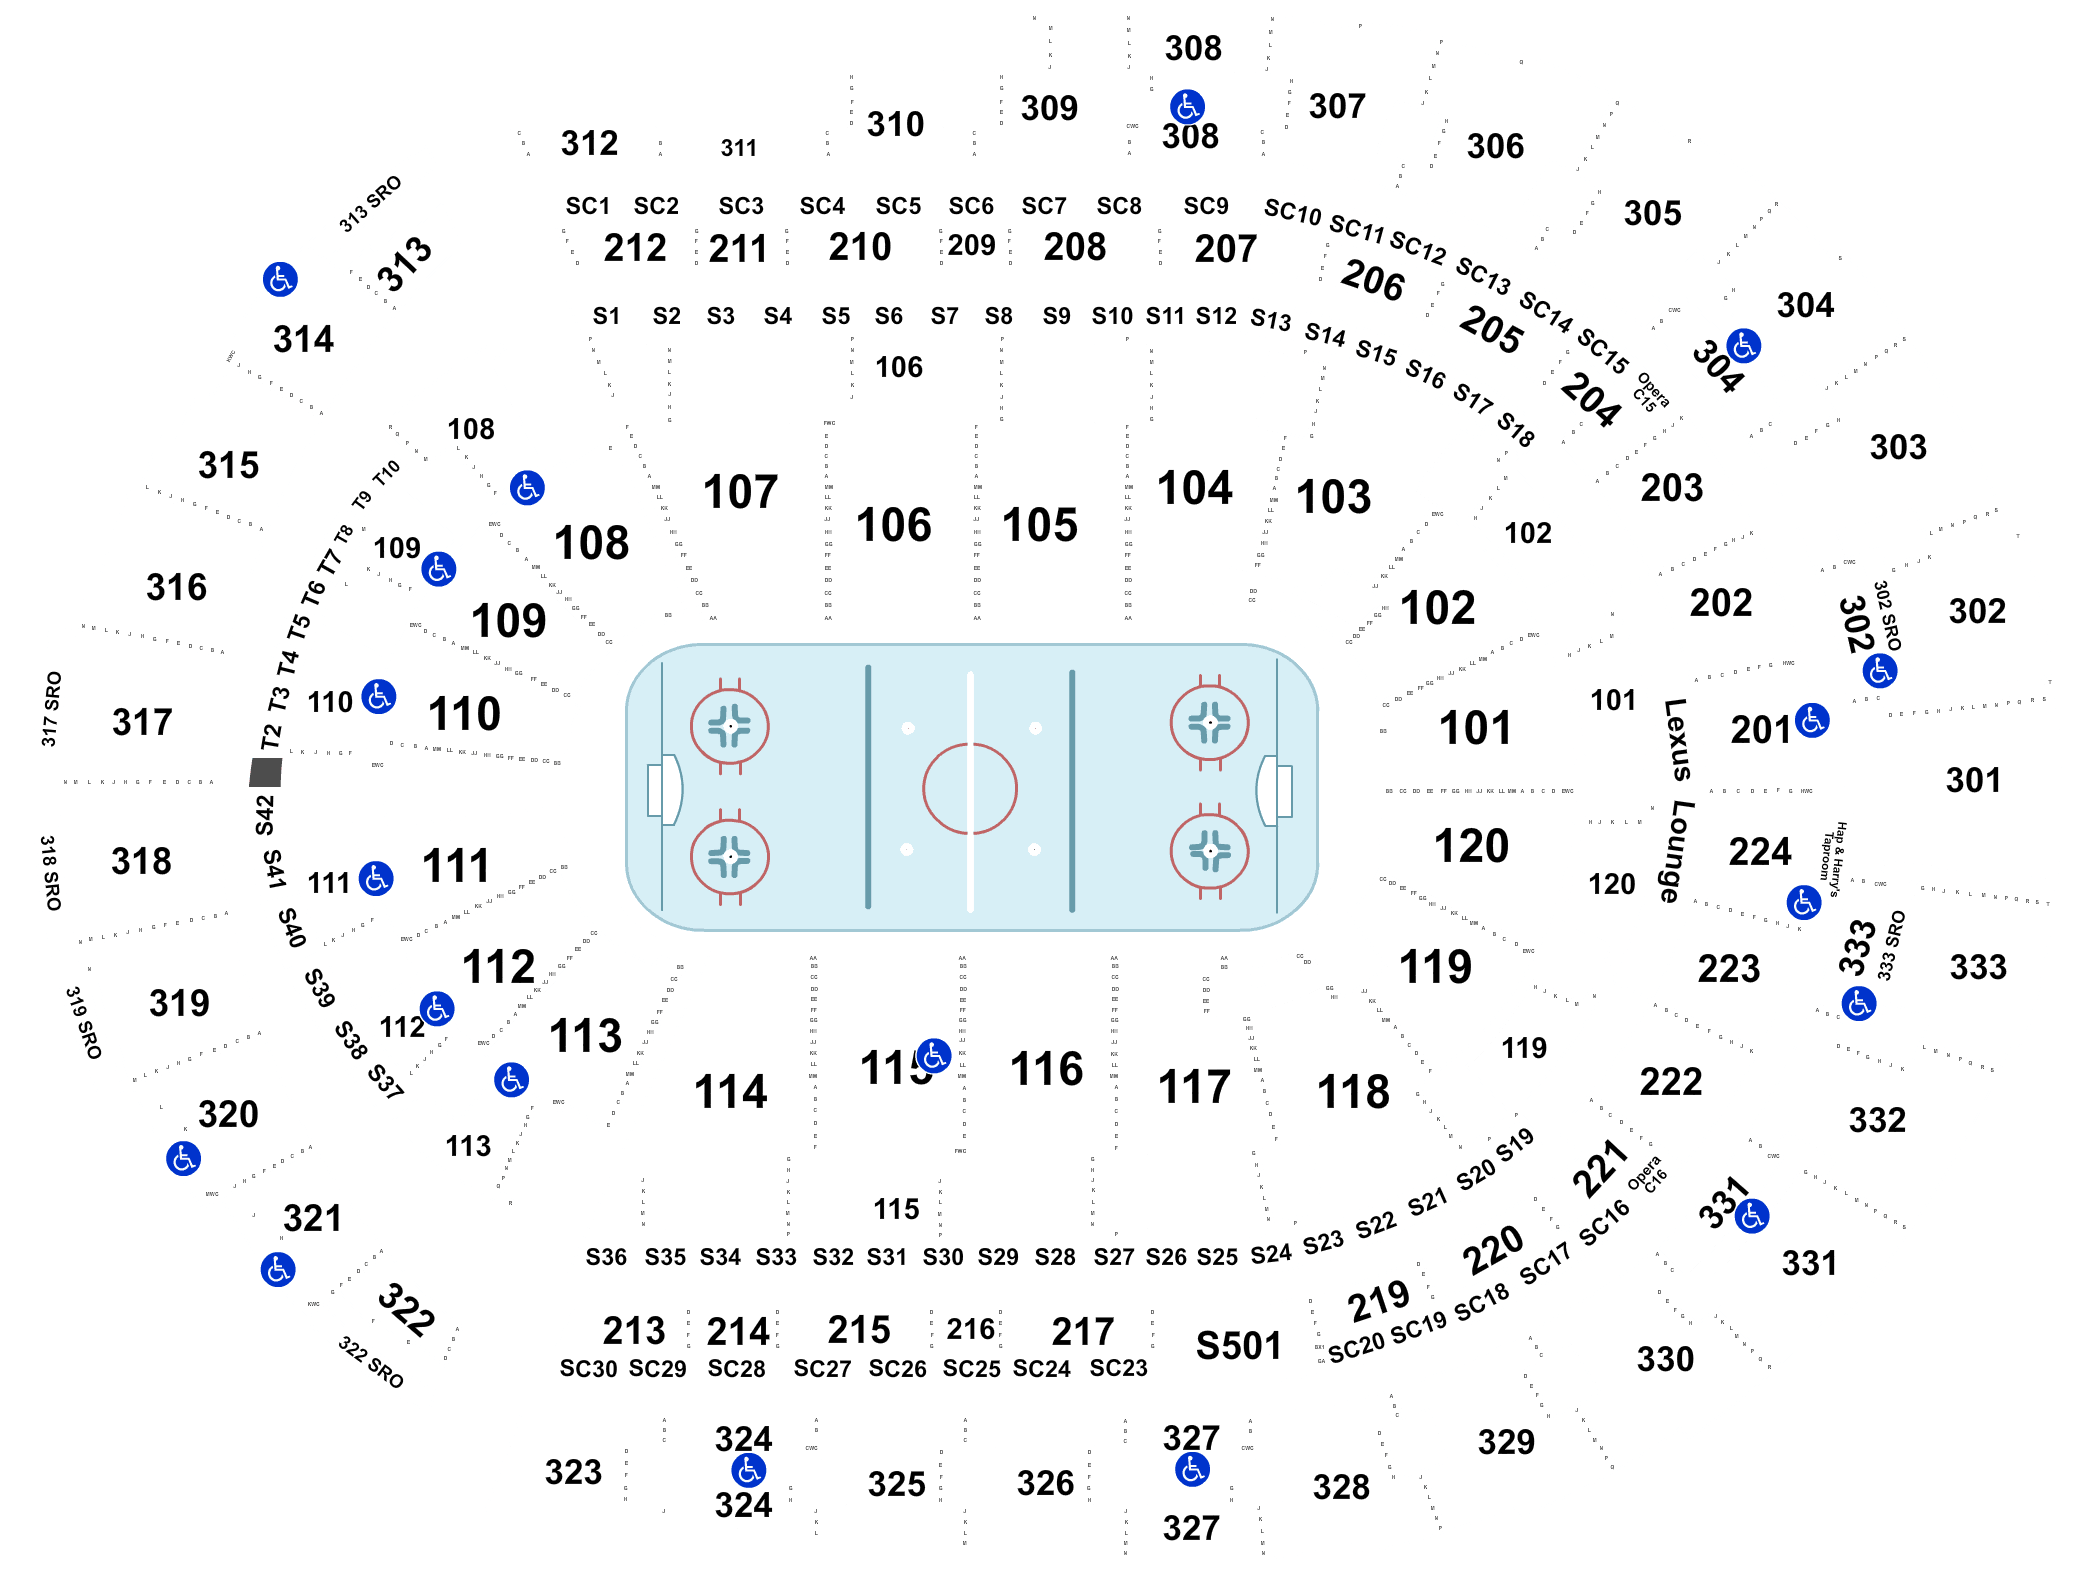 Nashville Predators ice hockey game ticket at Bridgestone Arena